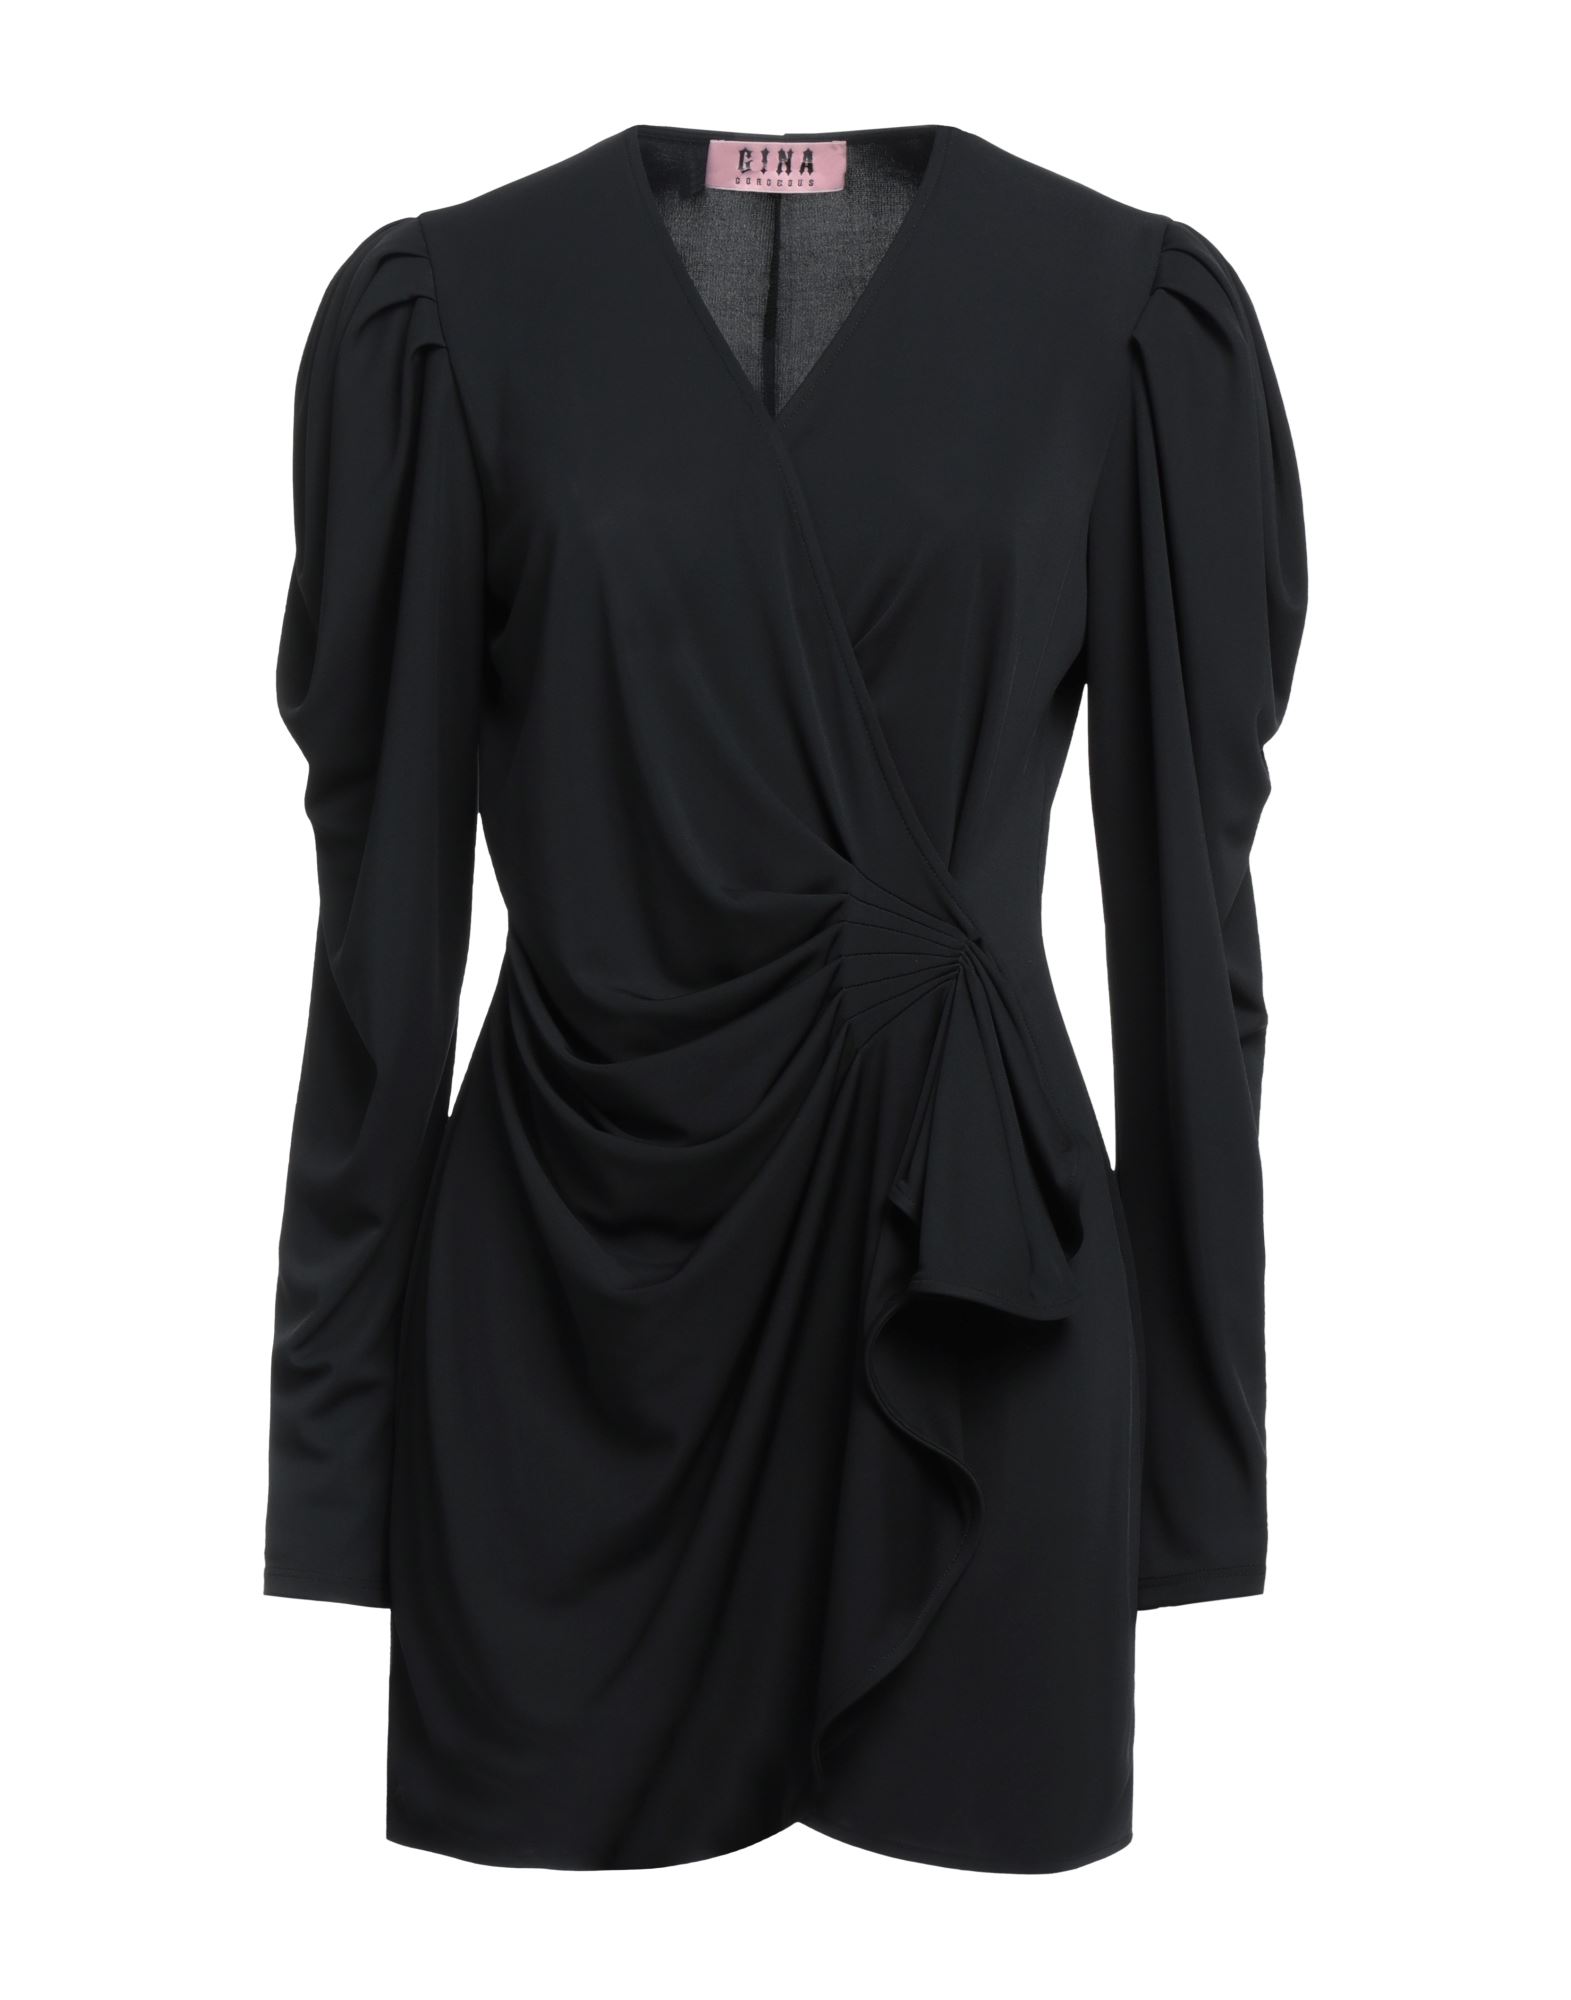 Gina Gorgeous Short Dresses In Black